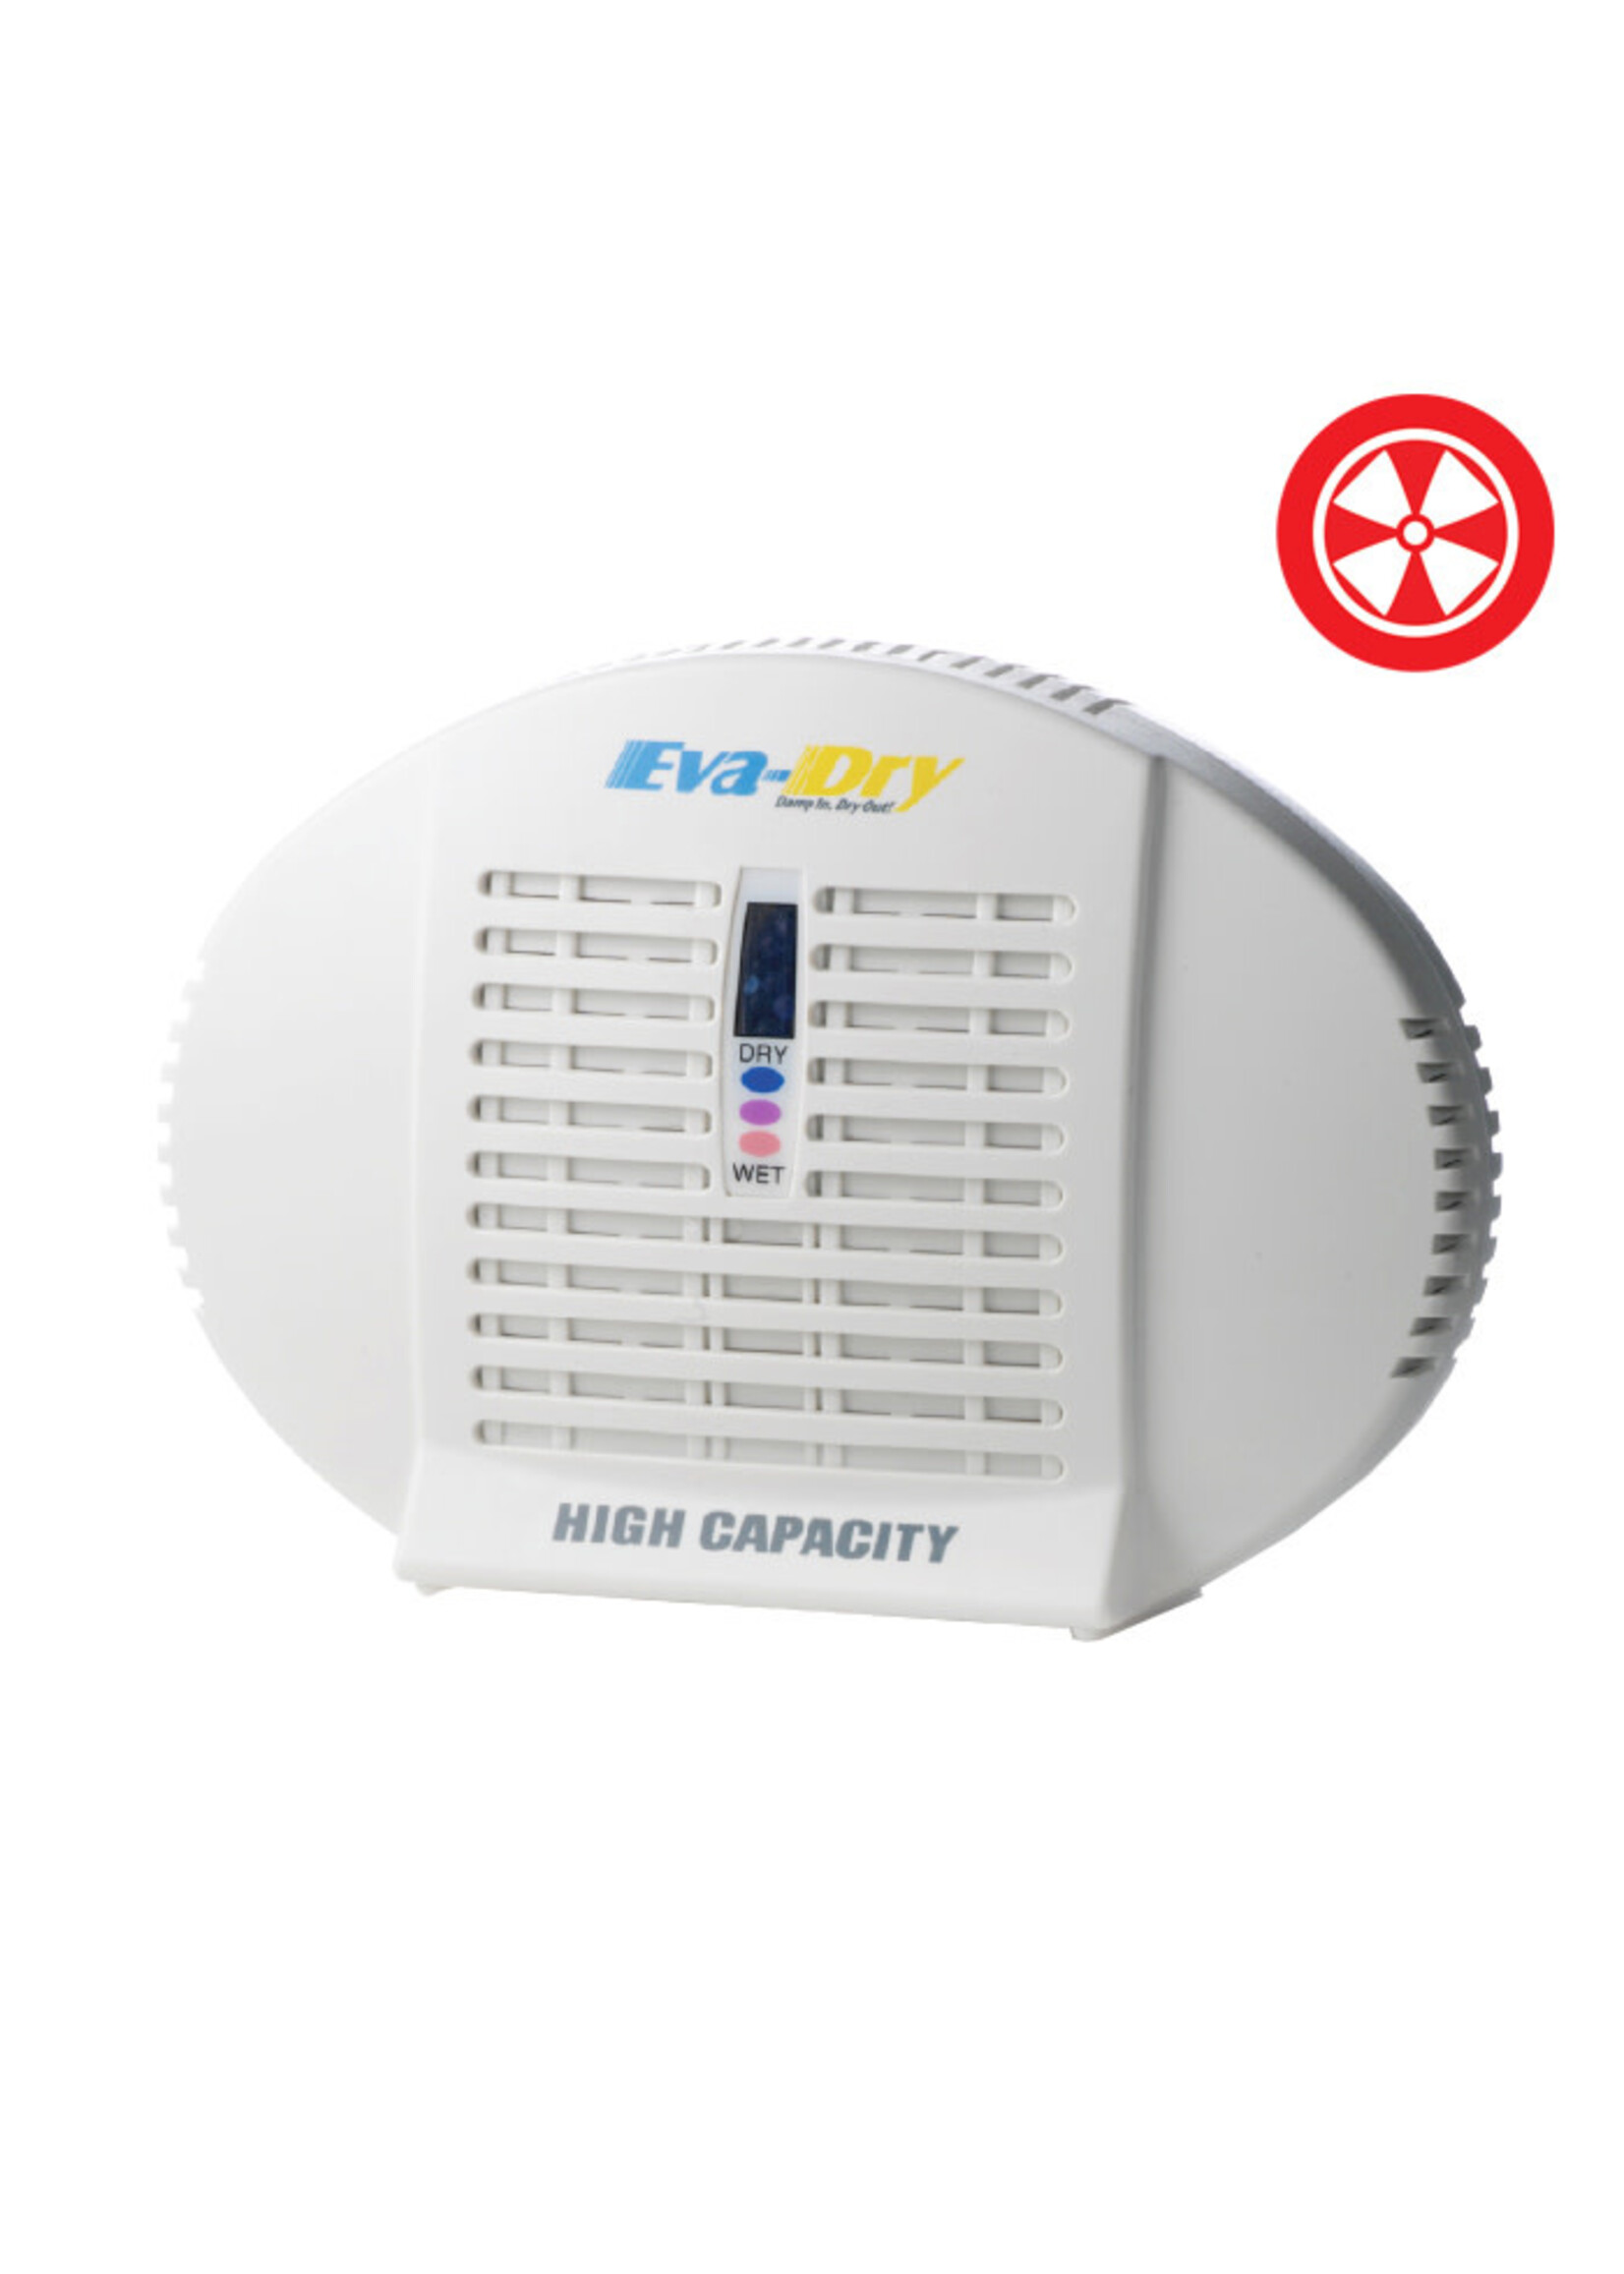 Eva-Dry Eva-Dry E-500 Mini Renewable Wireless Dehumidifier